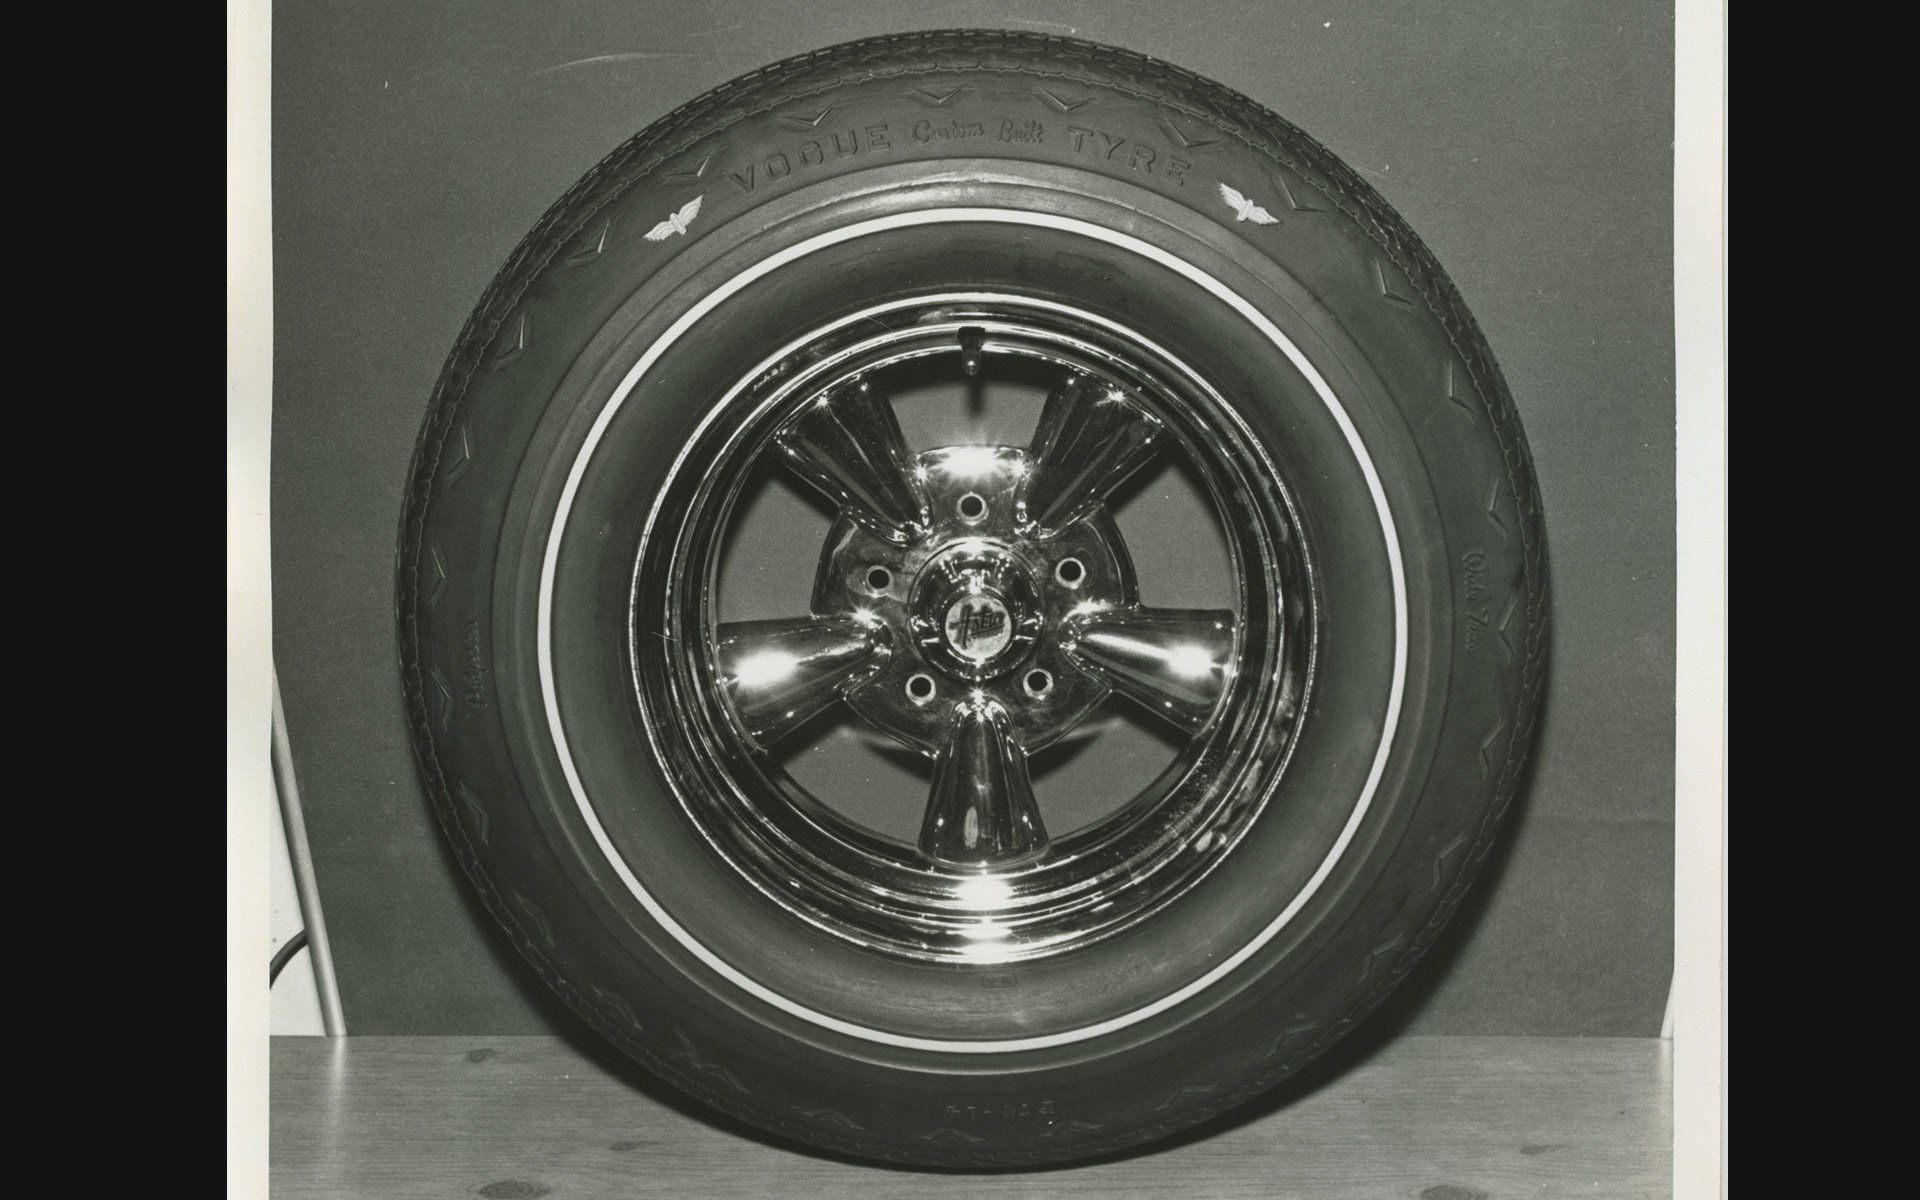 The Vogue Gold Streak tire.